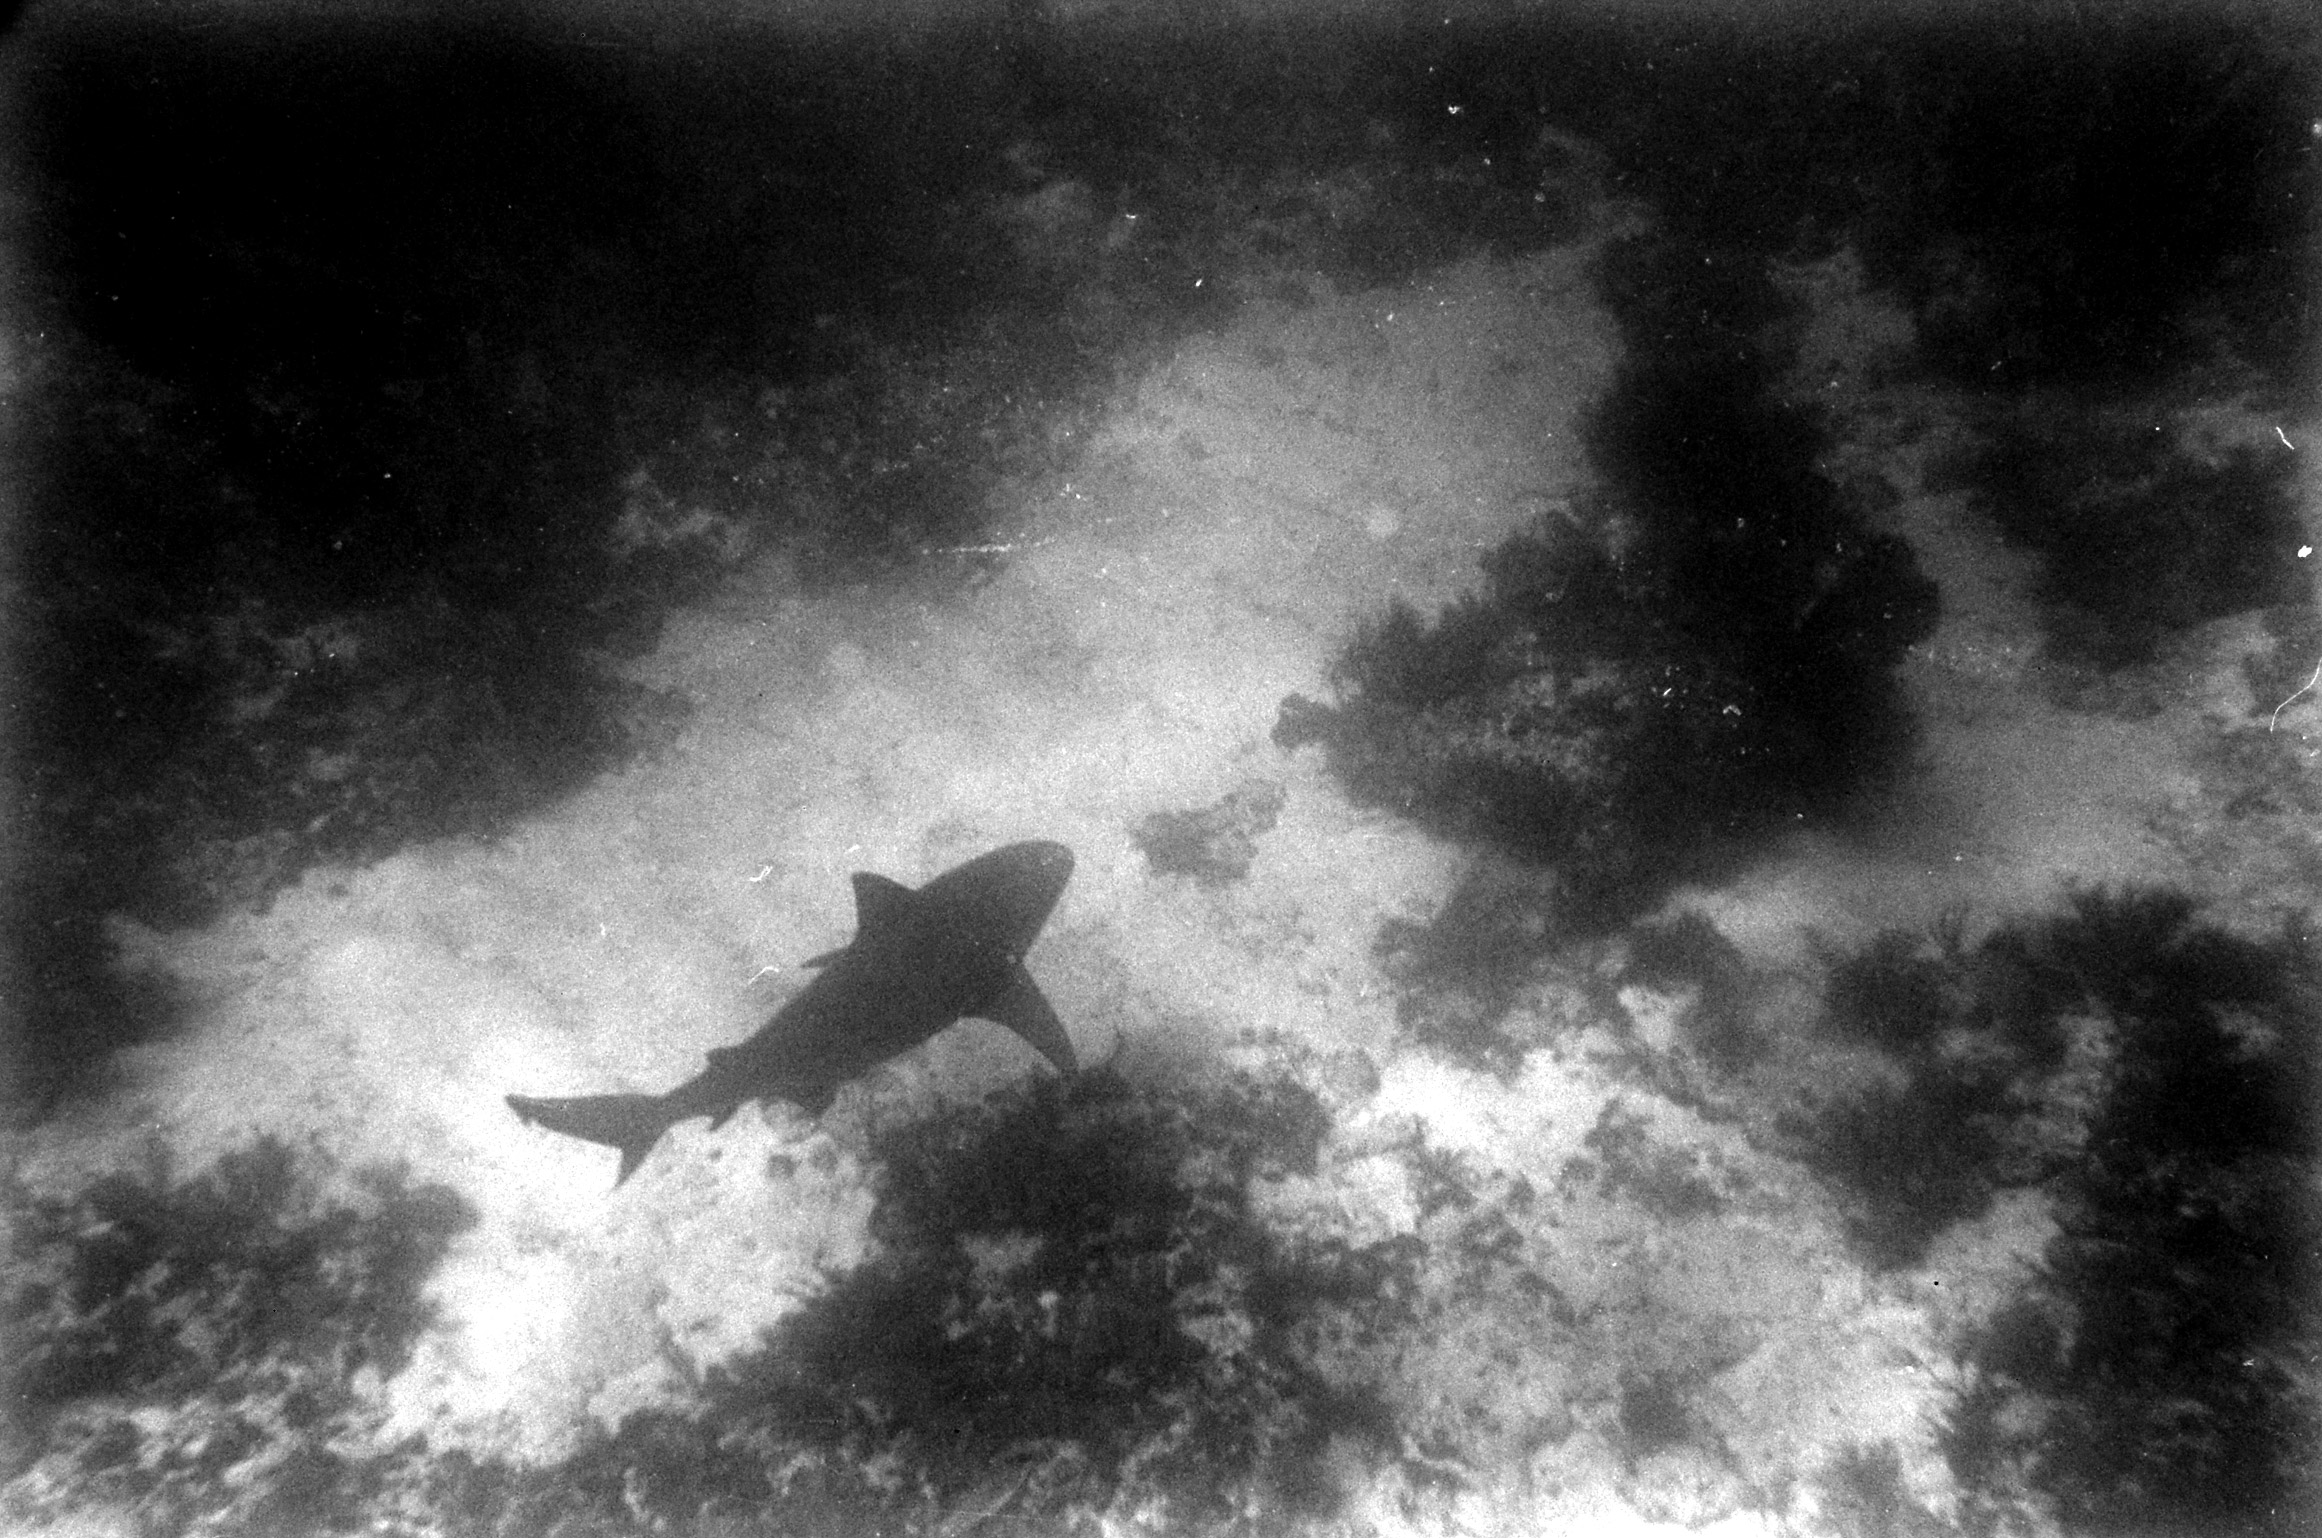 Unidentified shark, 1960.